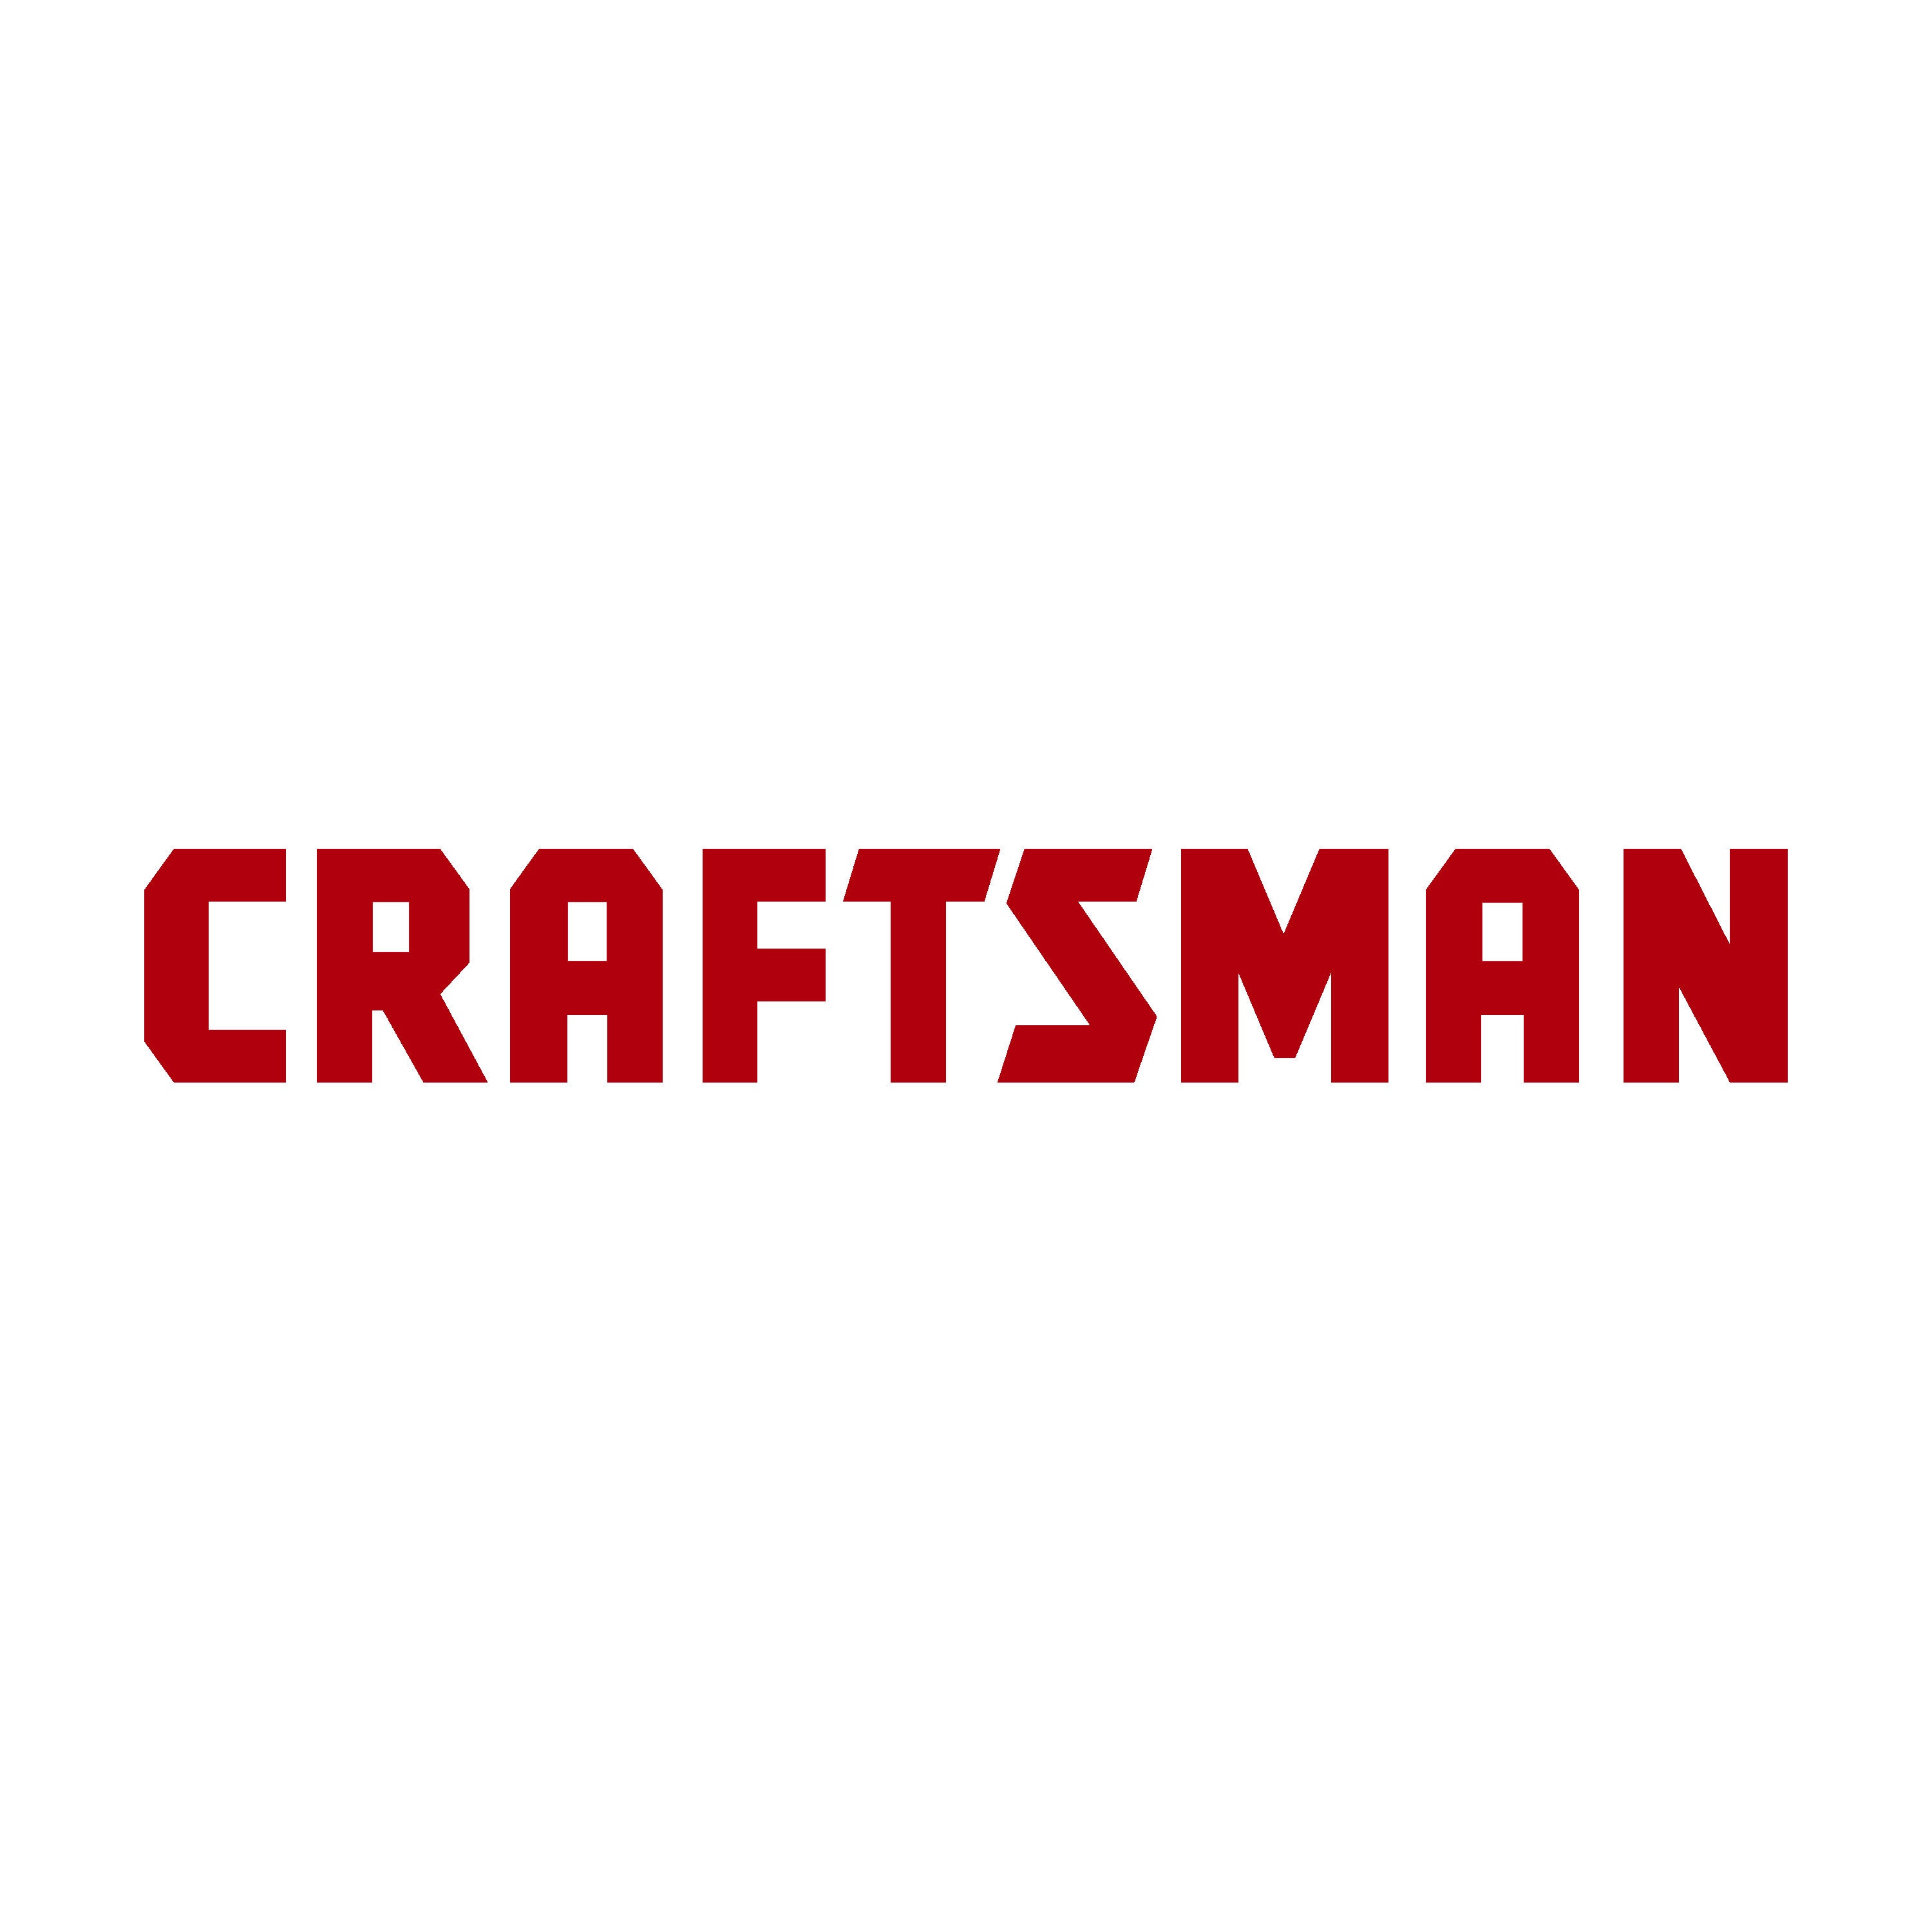 Craftsman tools logo for sale  